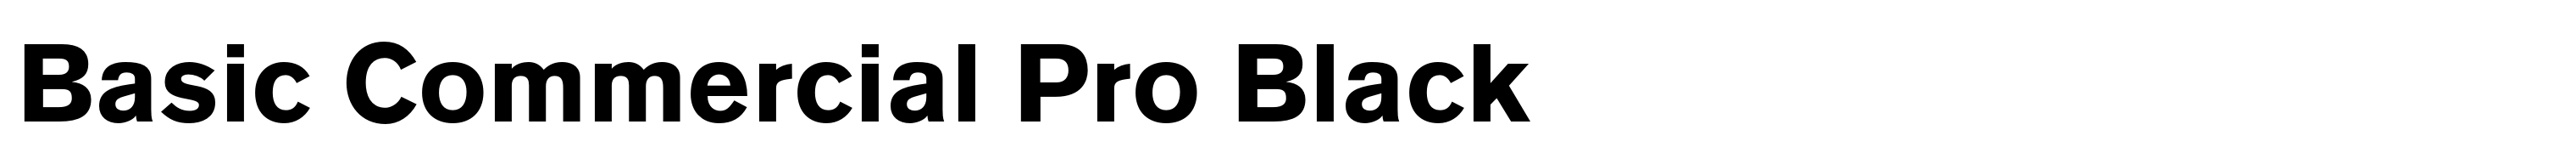 Basic Commercial Pro Black